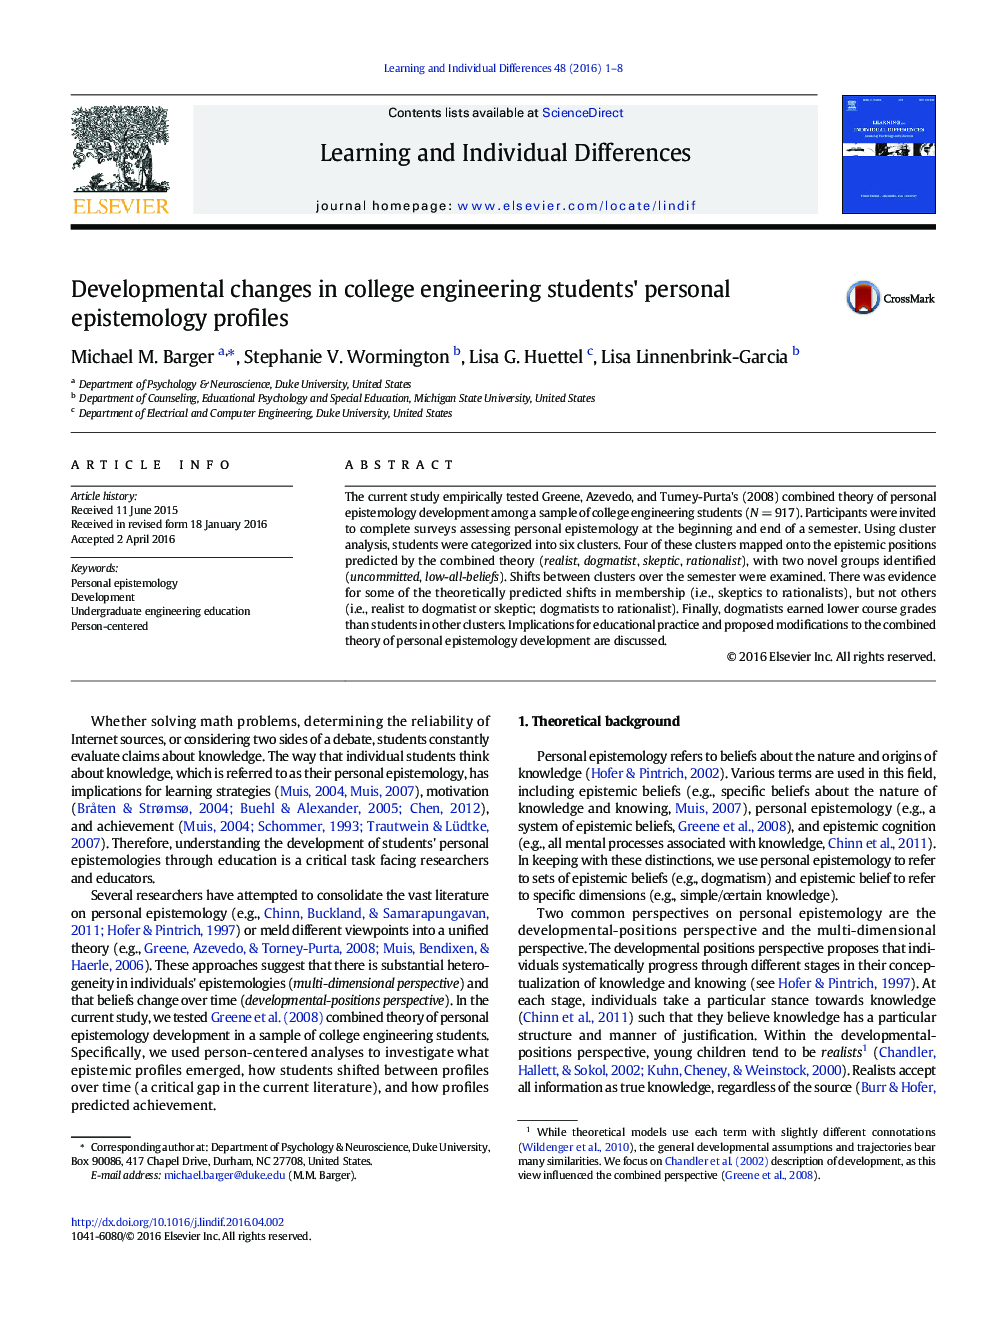 Developmental changes in college engineering students' personal epistemology profiles